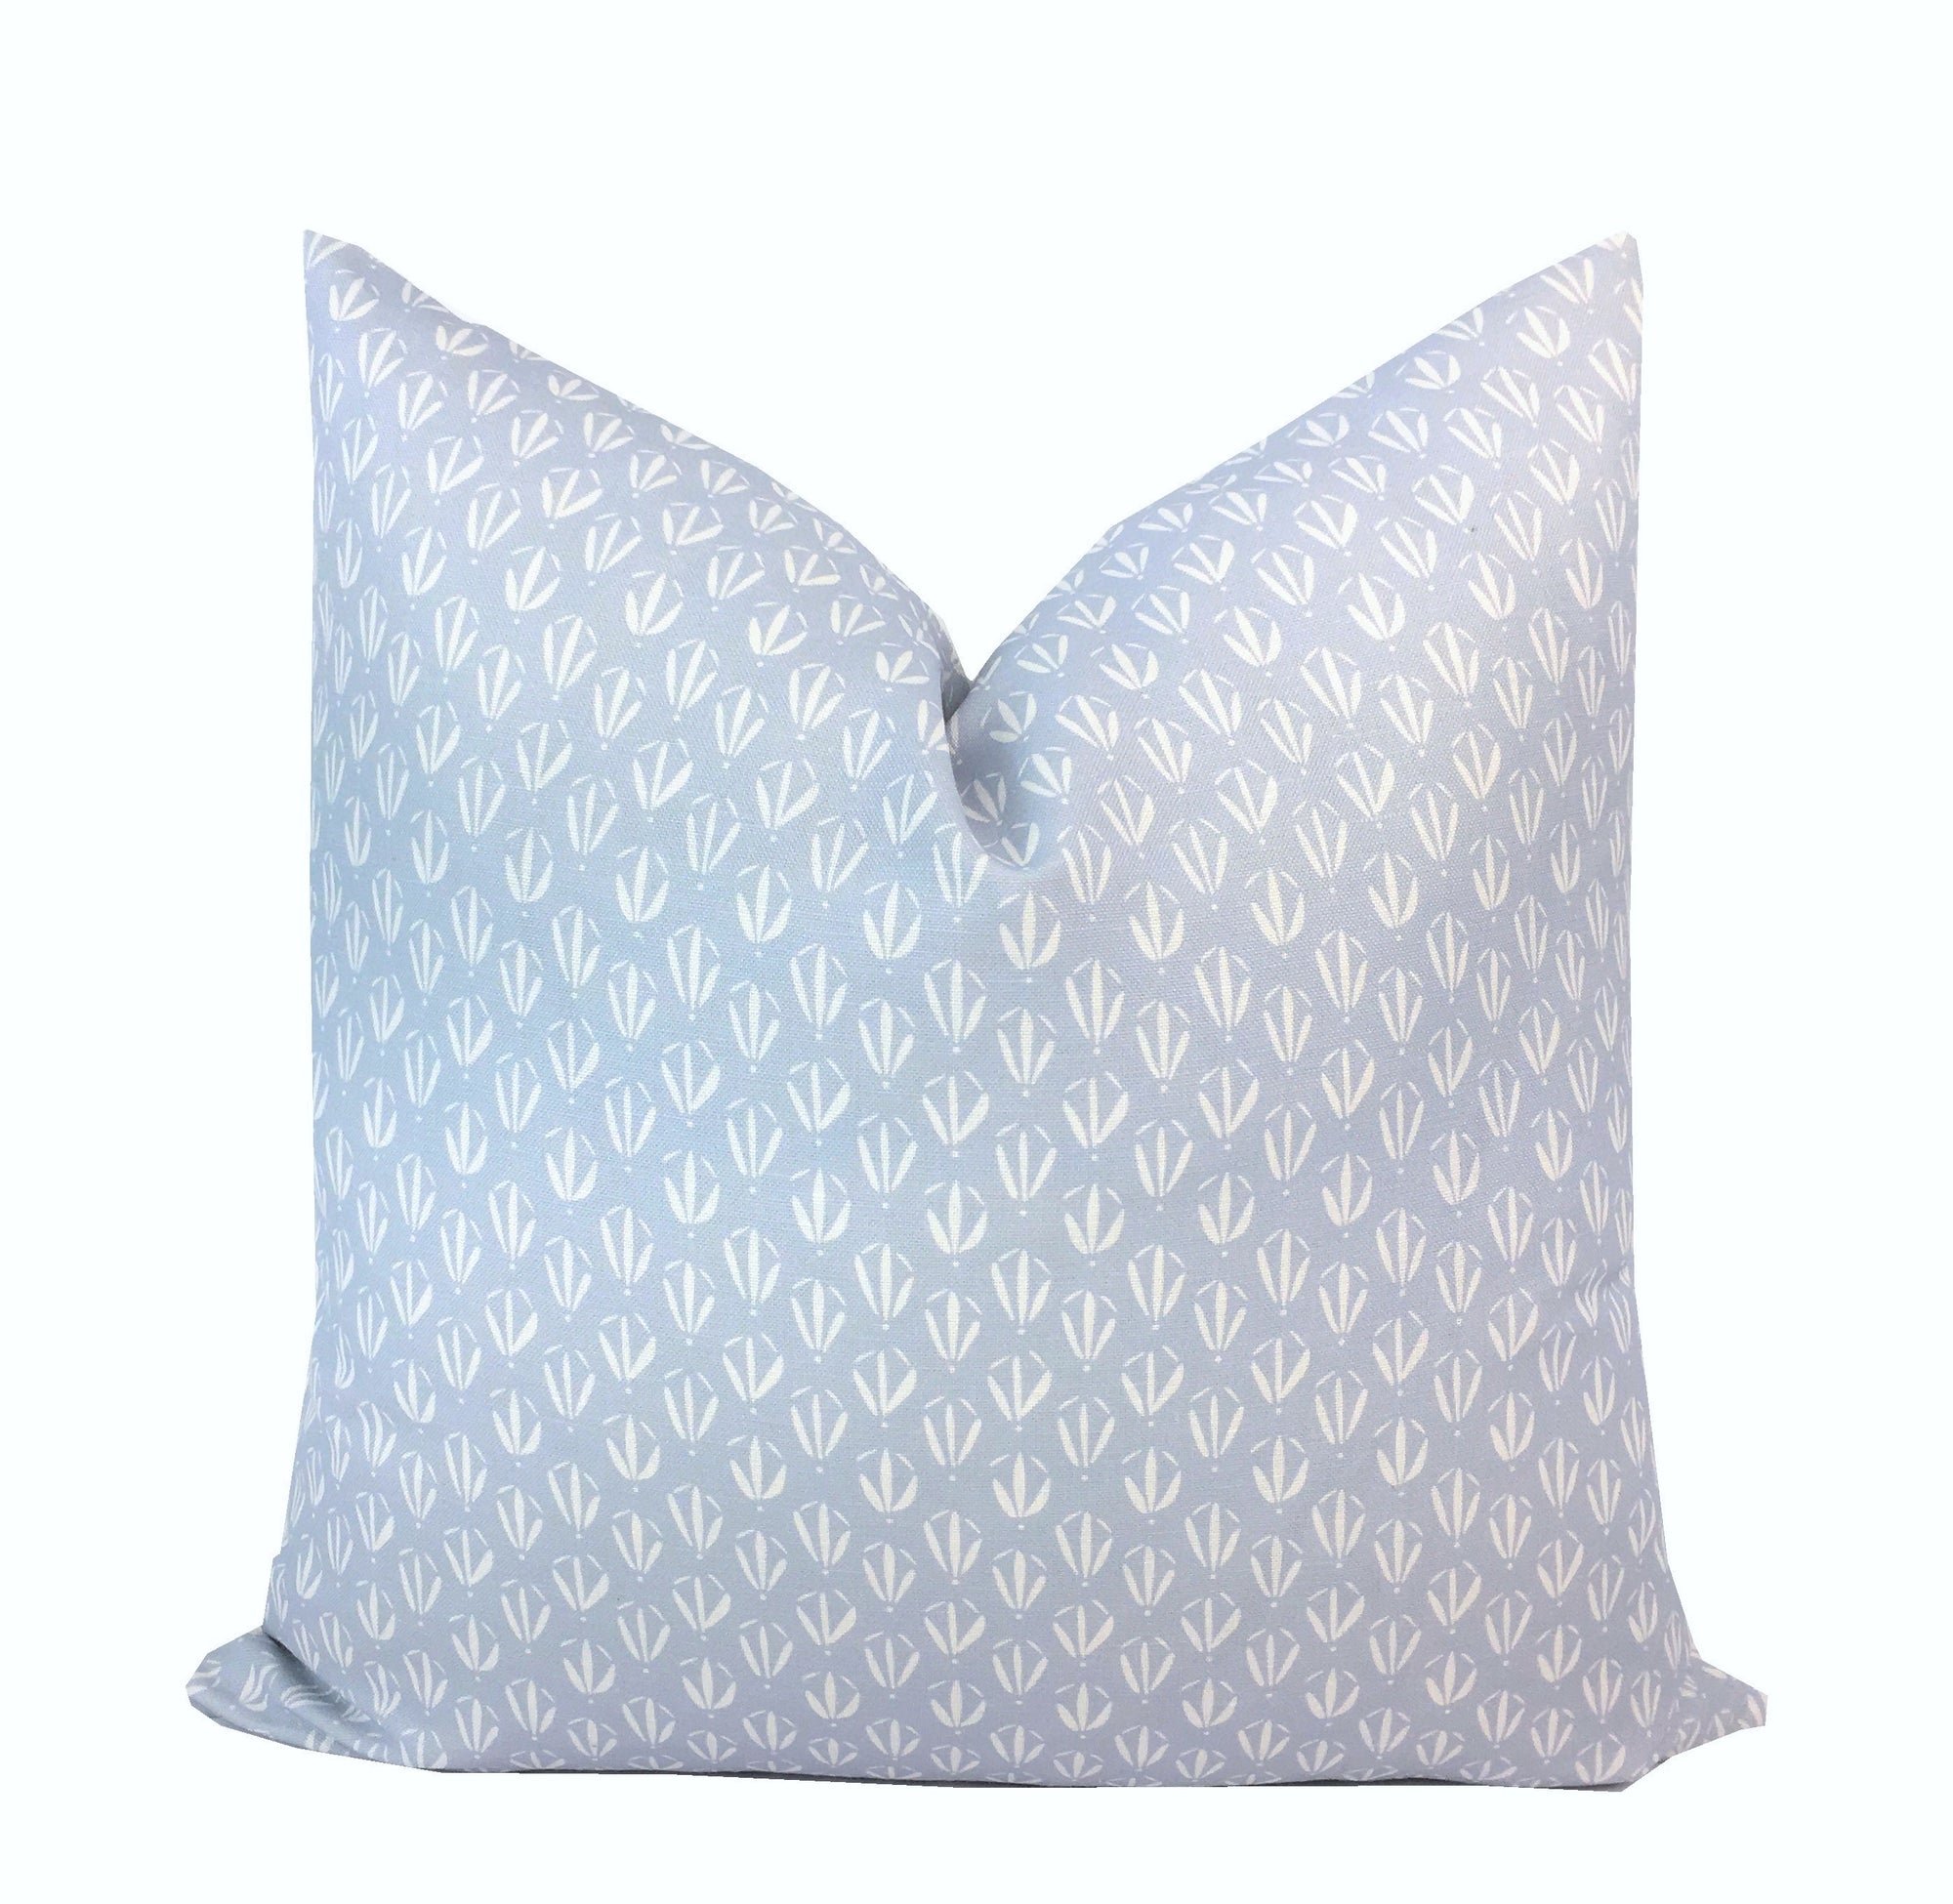 Haint Blue Pillow Cover | Kiawah| Ivory pattern on Haint Blue Linen | Blue Neutral